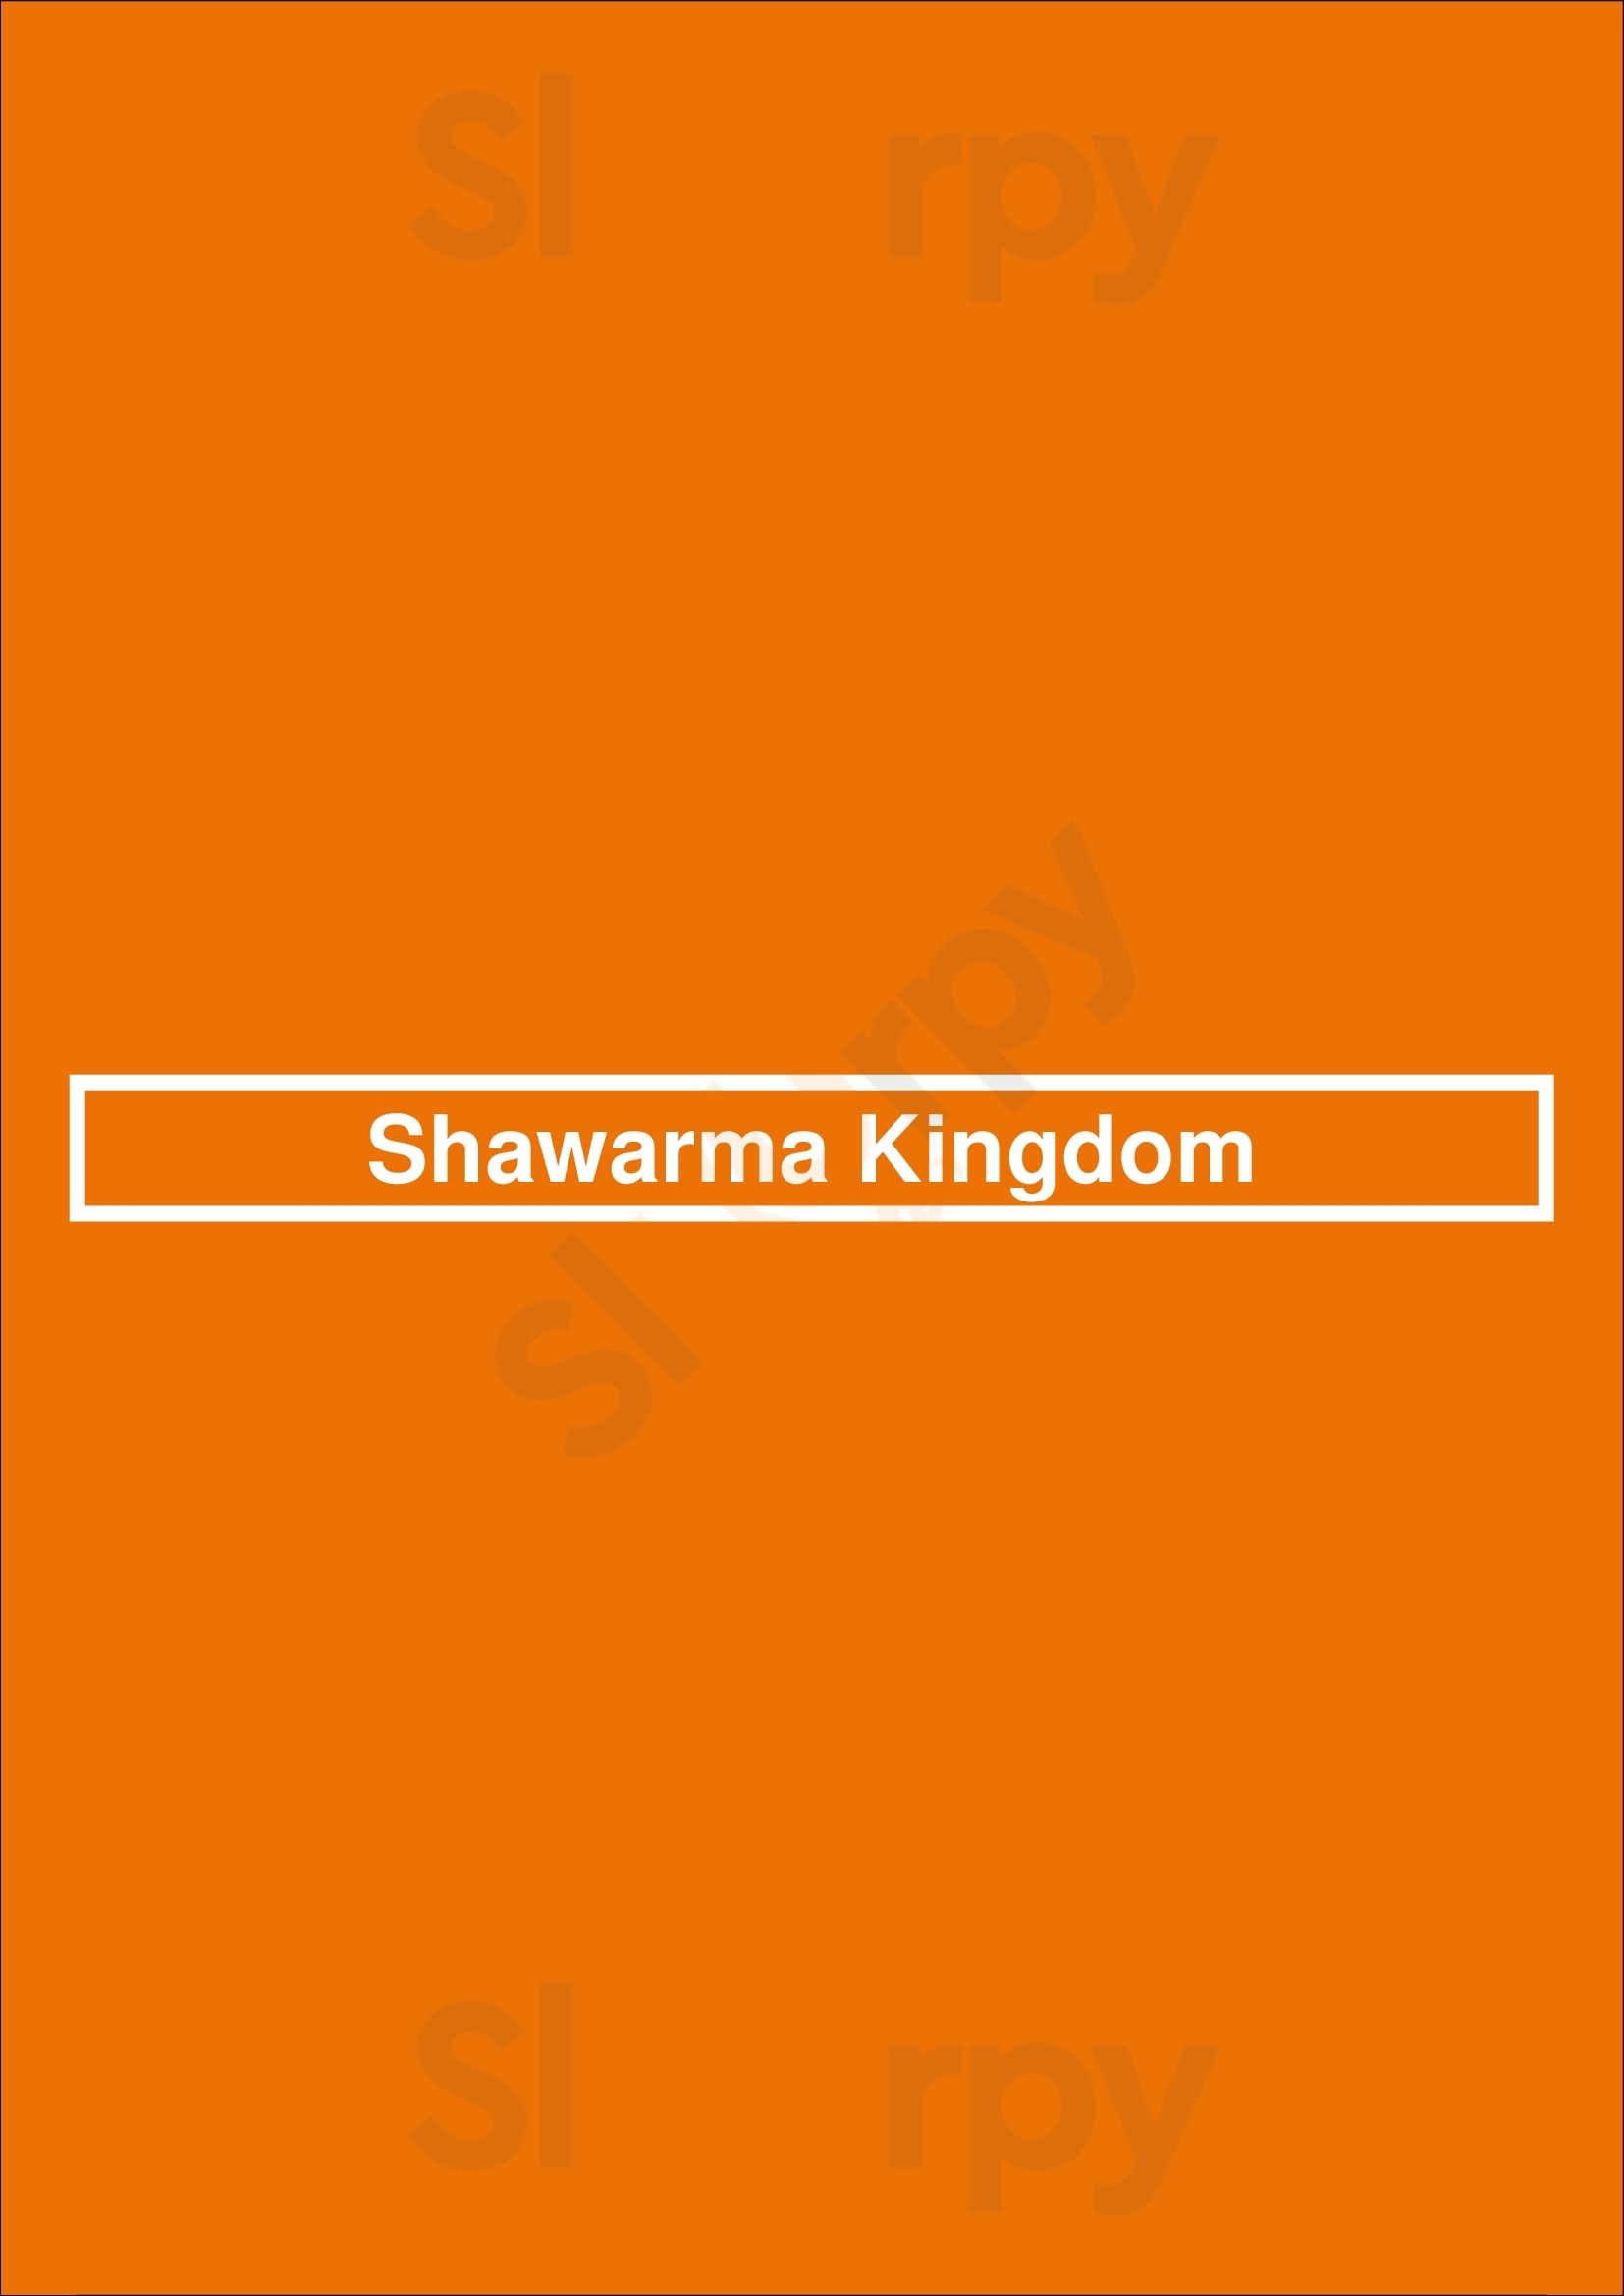 Shawarma Kingdom Las Vegas Menu - 1